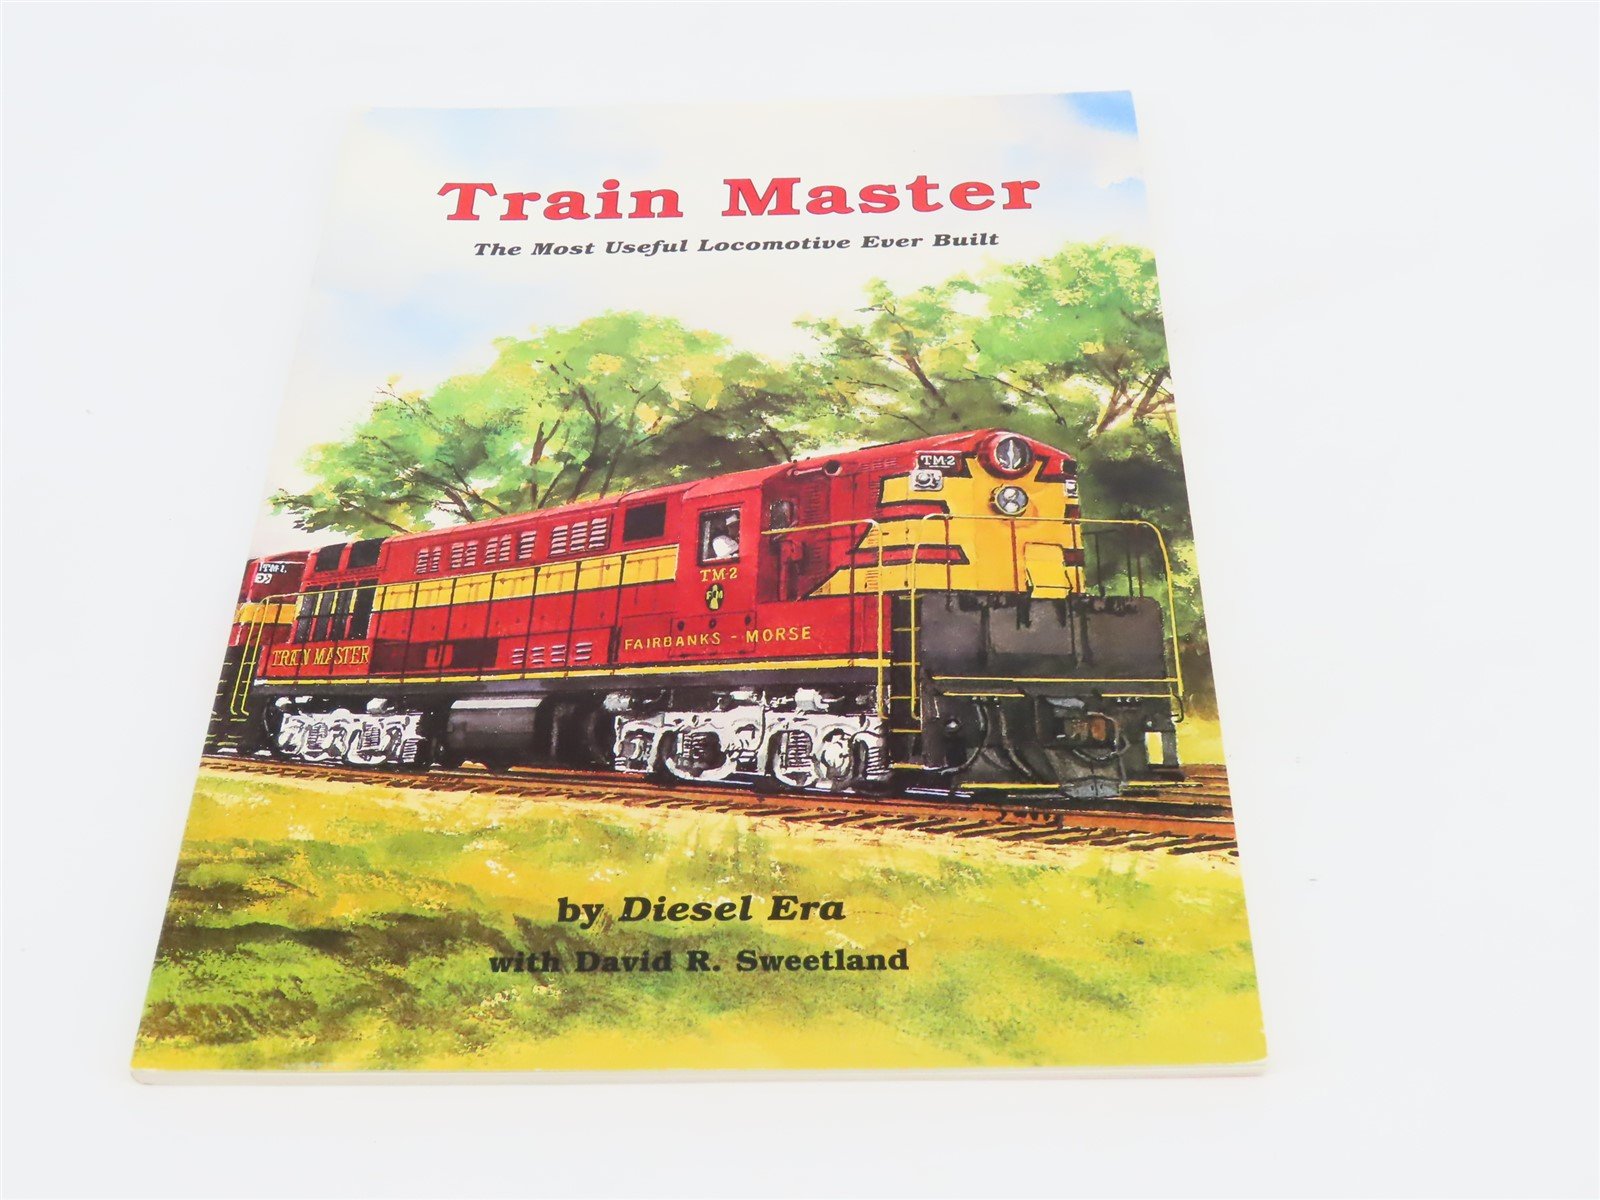 Train Master by Diesel Era with David R. Sweetland ©1997 SC Book